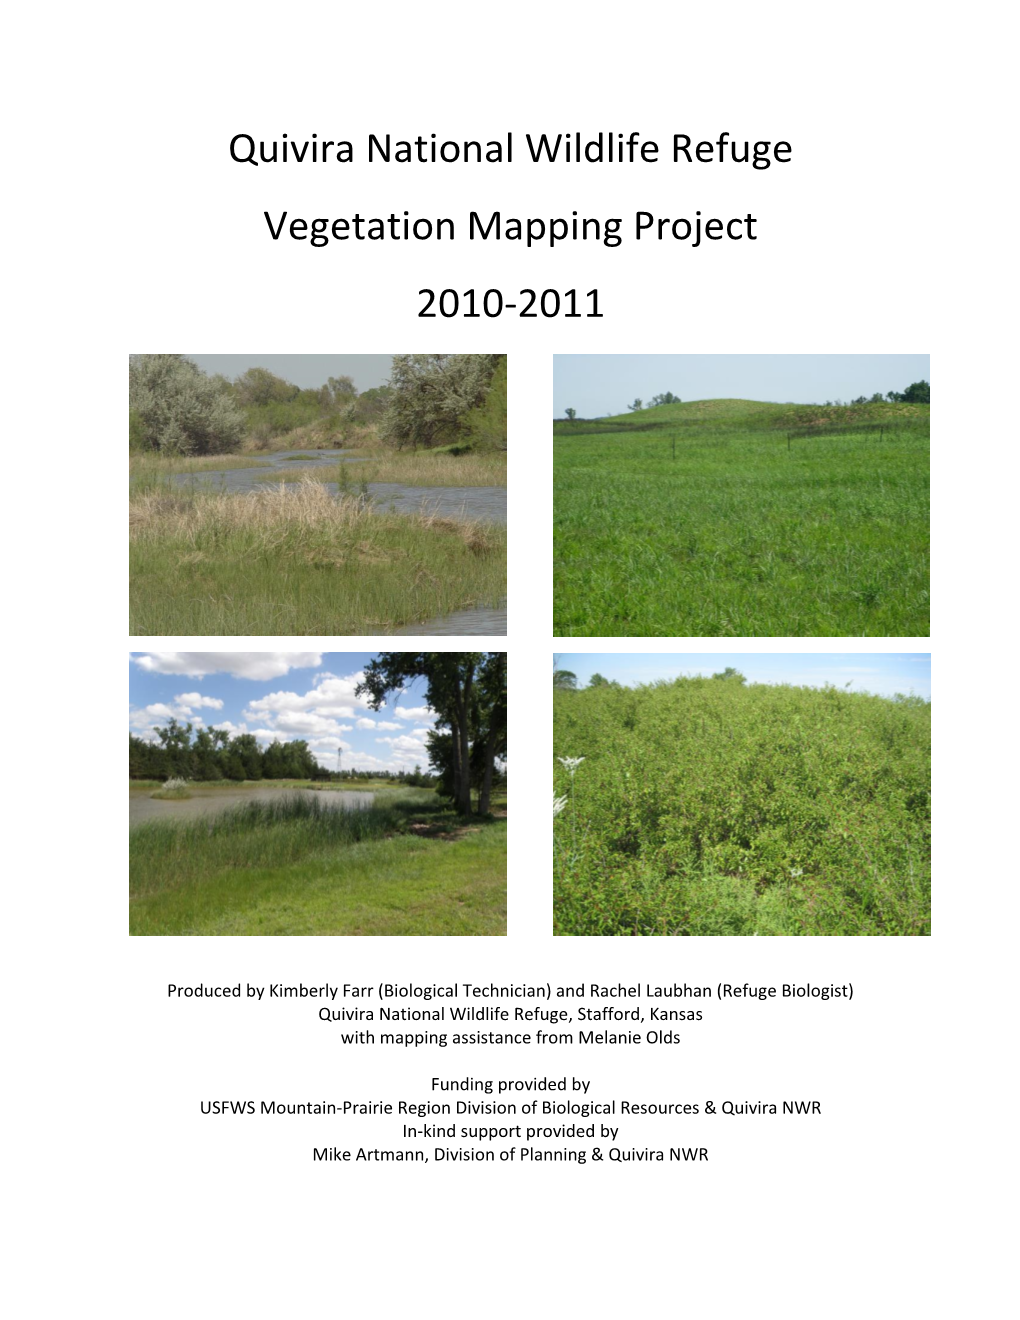 Quivira National Wildlife Refuge Vegetation Mapping Project 2010-2011